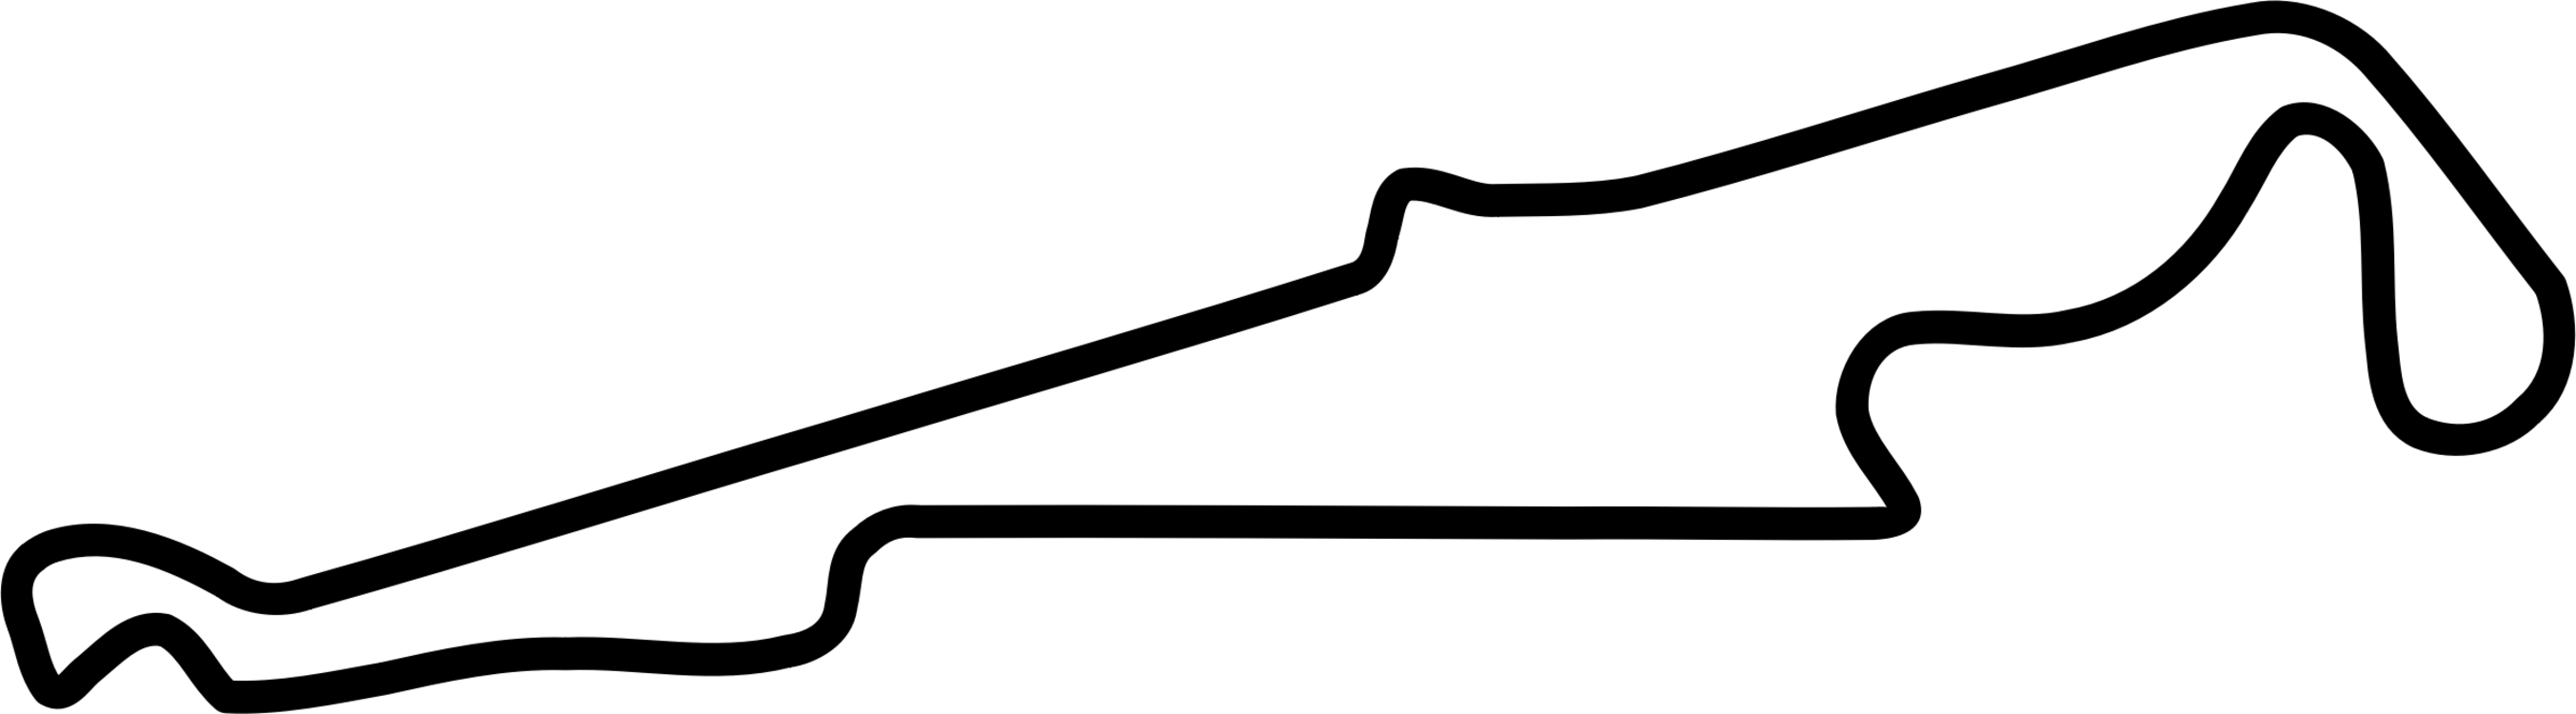 Circuit Paul Ricard 2018 Fia Formula One World Championship - Paul Ricard Circuit Layout (2706x750)